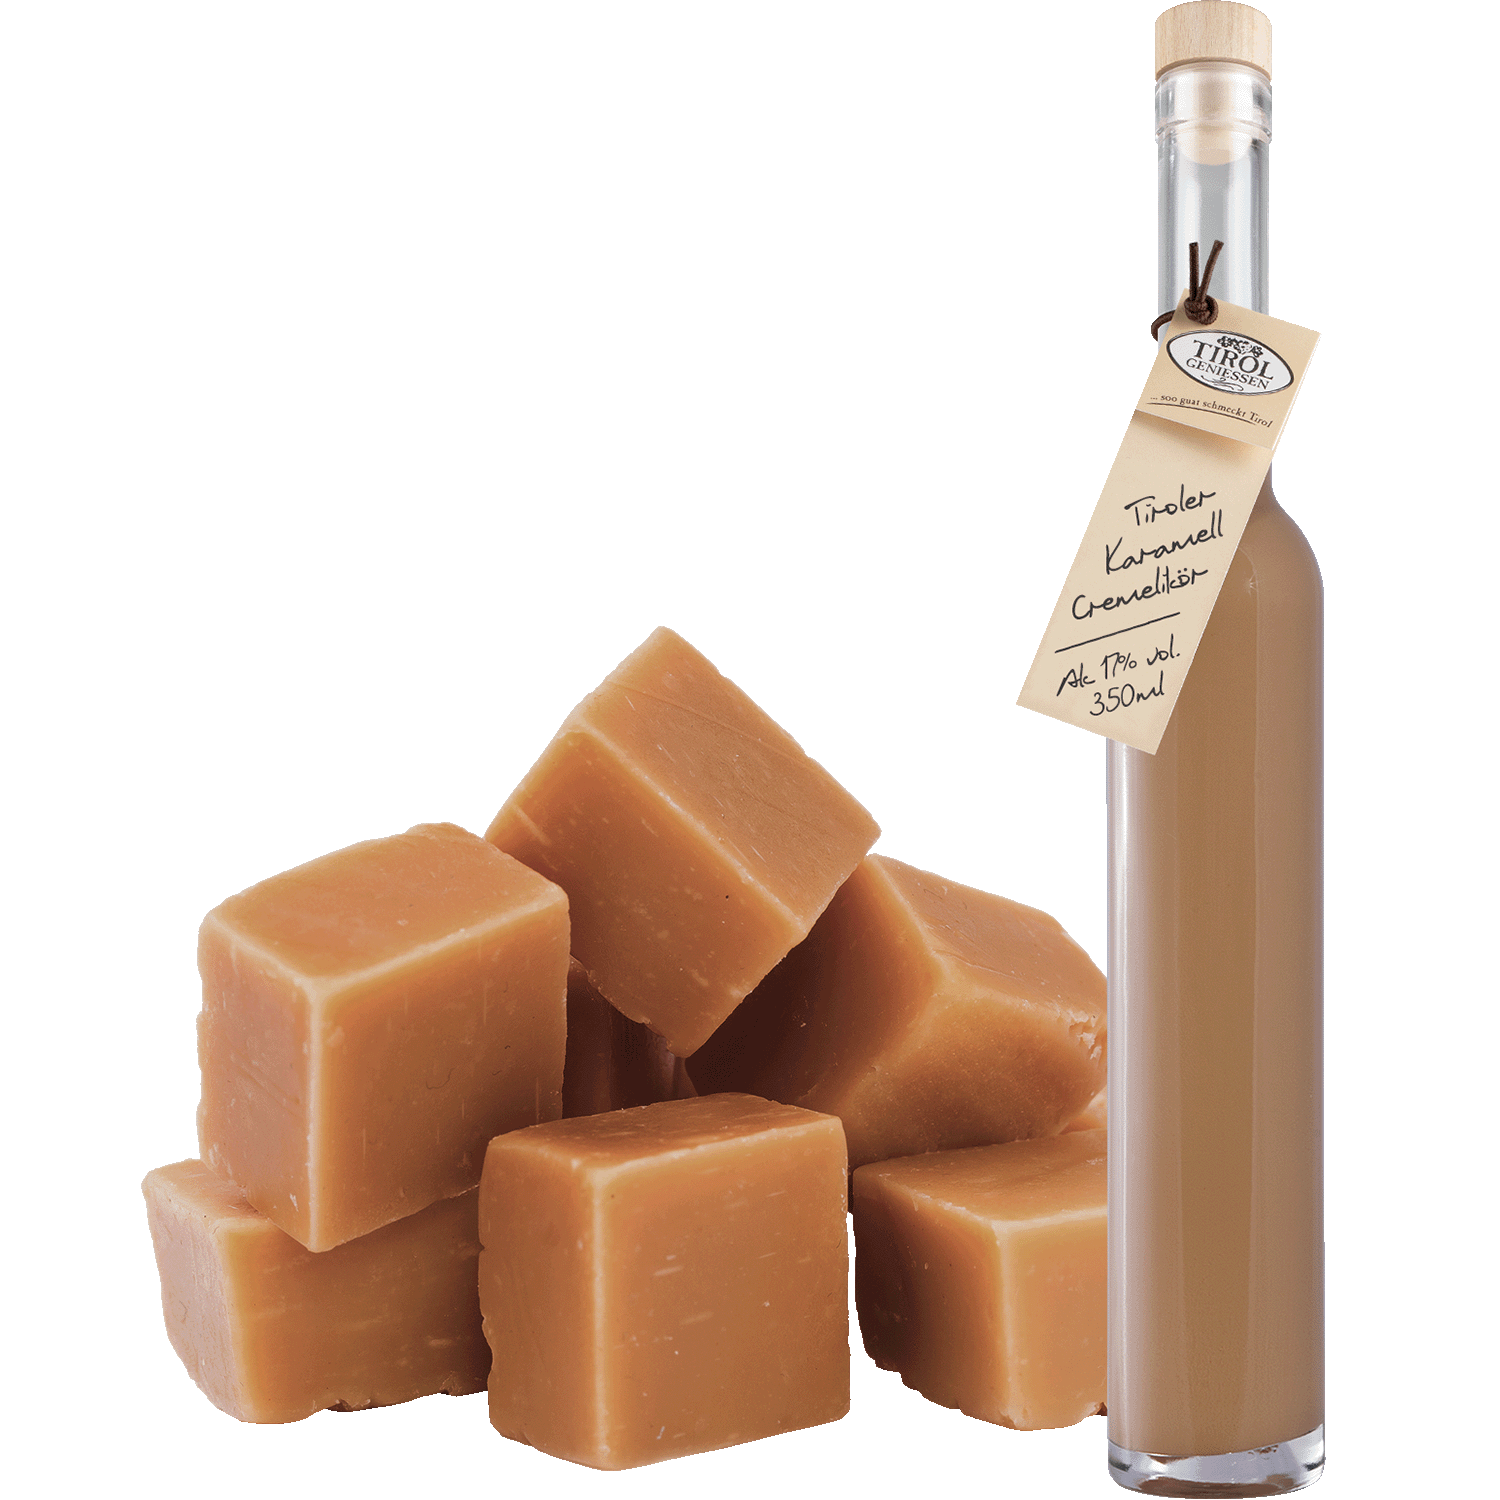 Caramel Cream Liqueur in gift bottle from Austria from Tirol Geniessen